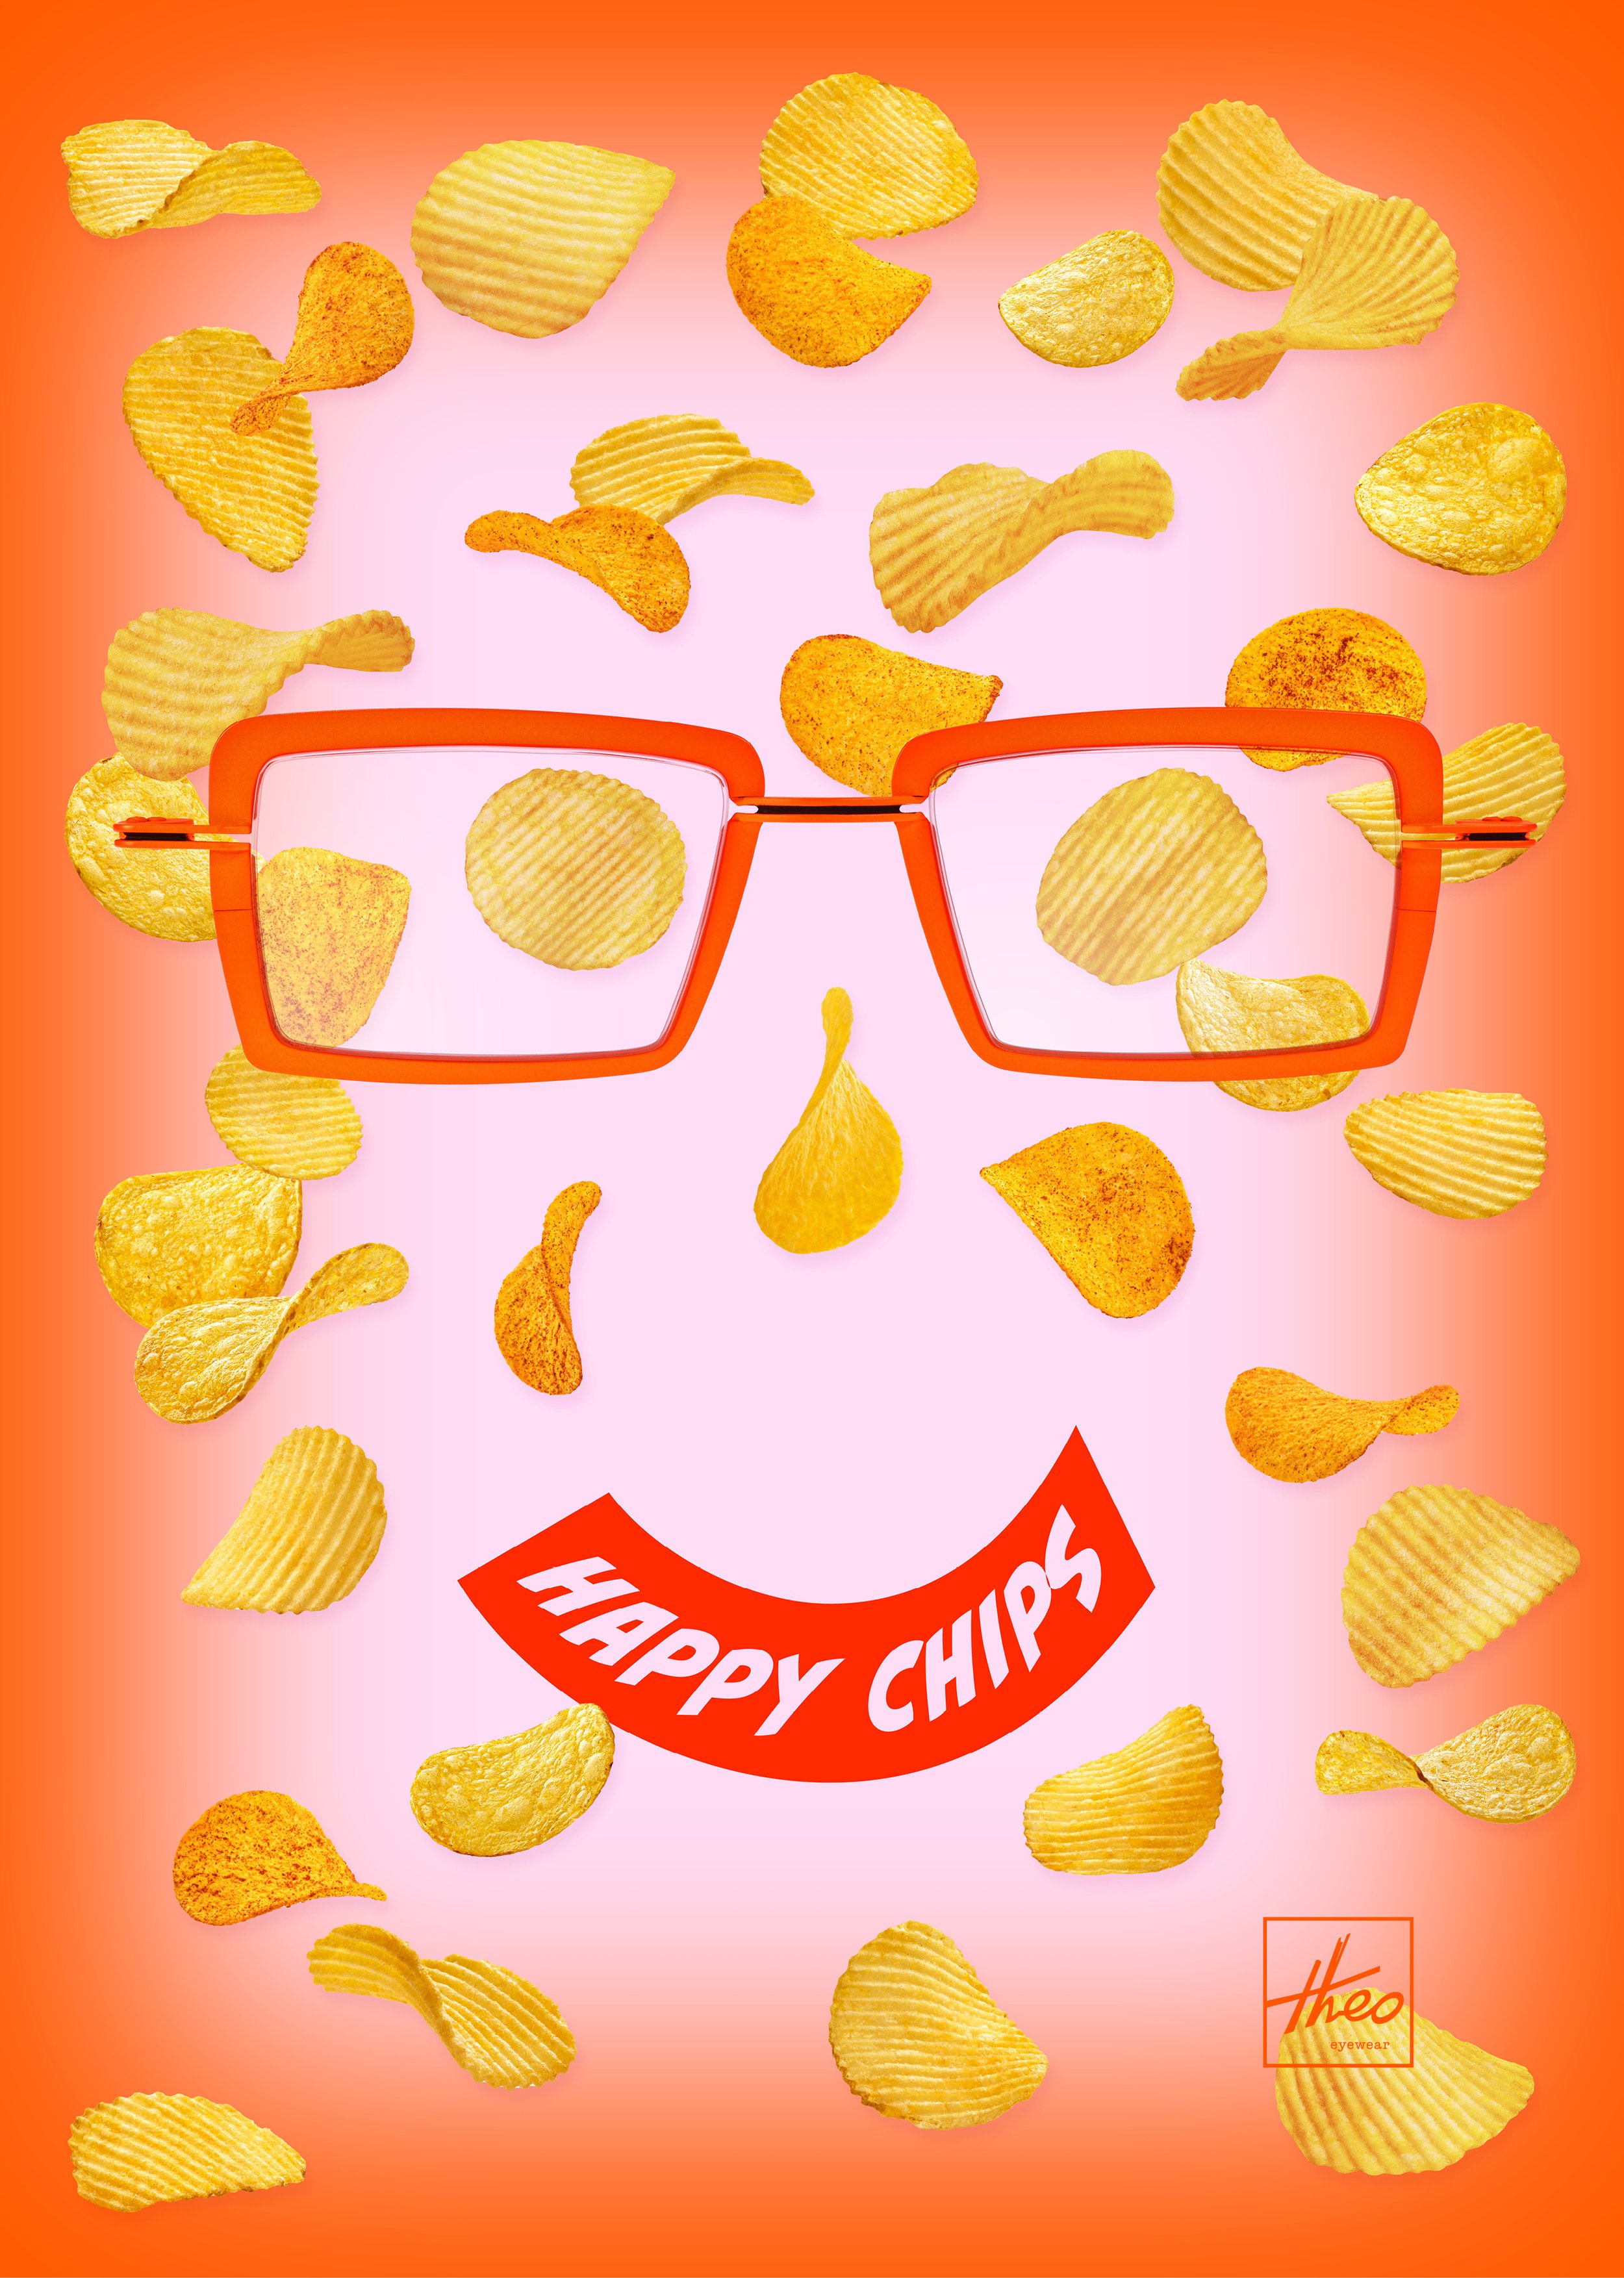 Happy chips_A4-01b.jpg